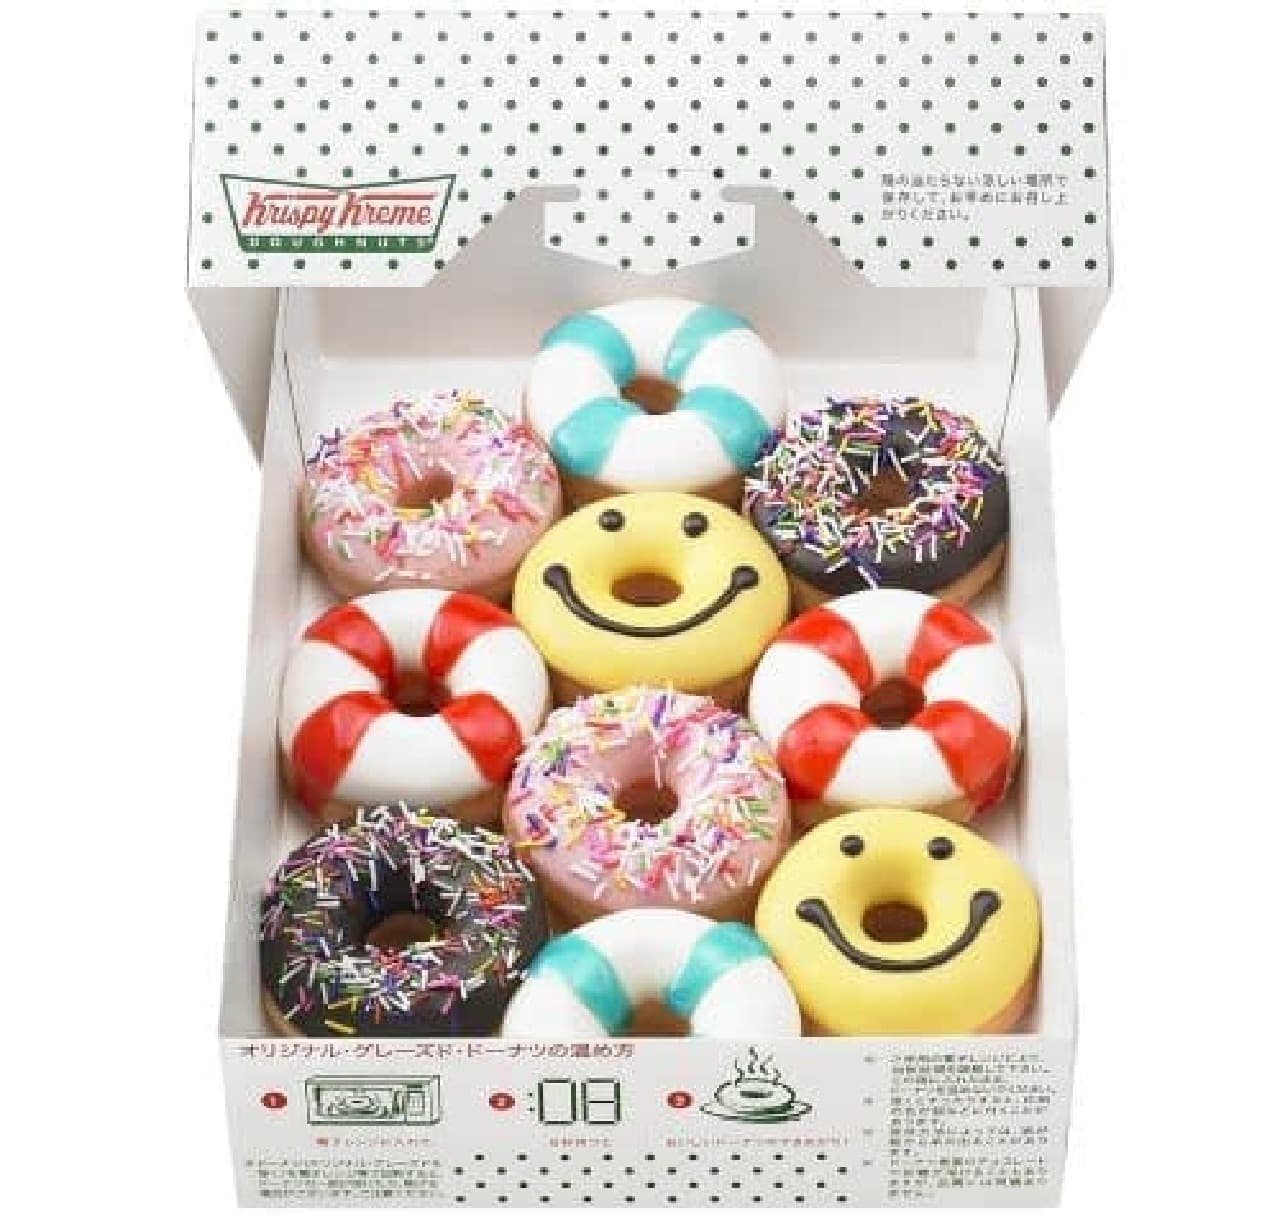 Summer Mini Box Half" is a set of 10 mini doughnuts.